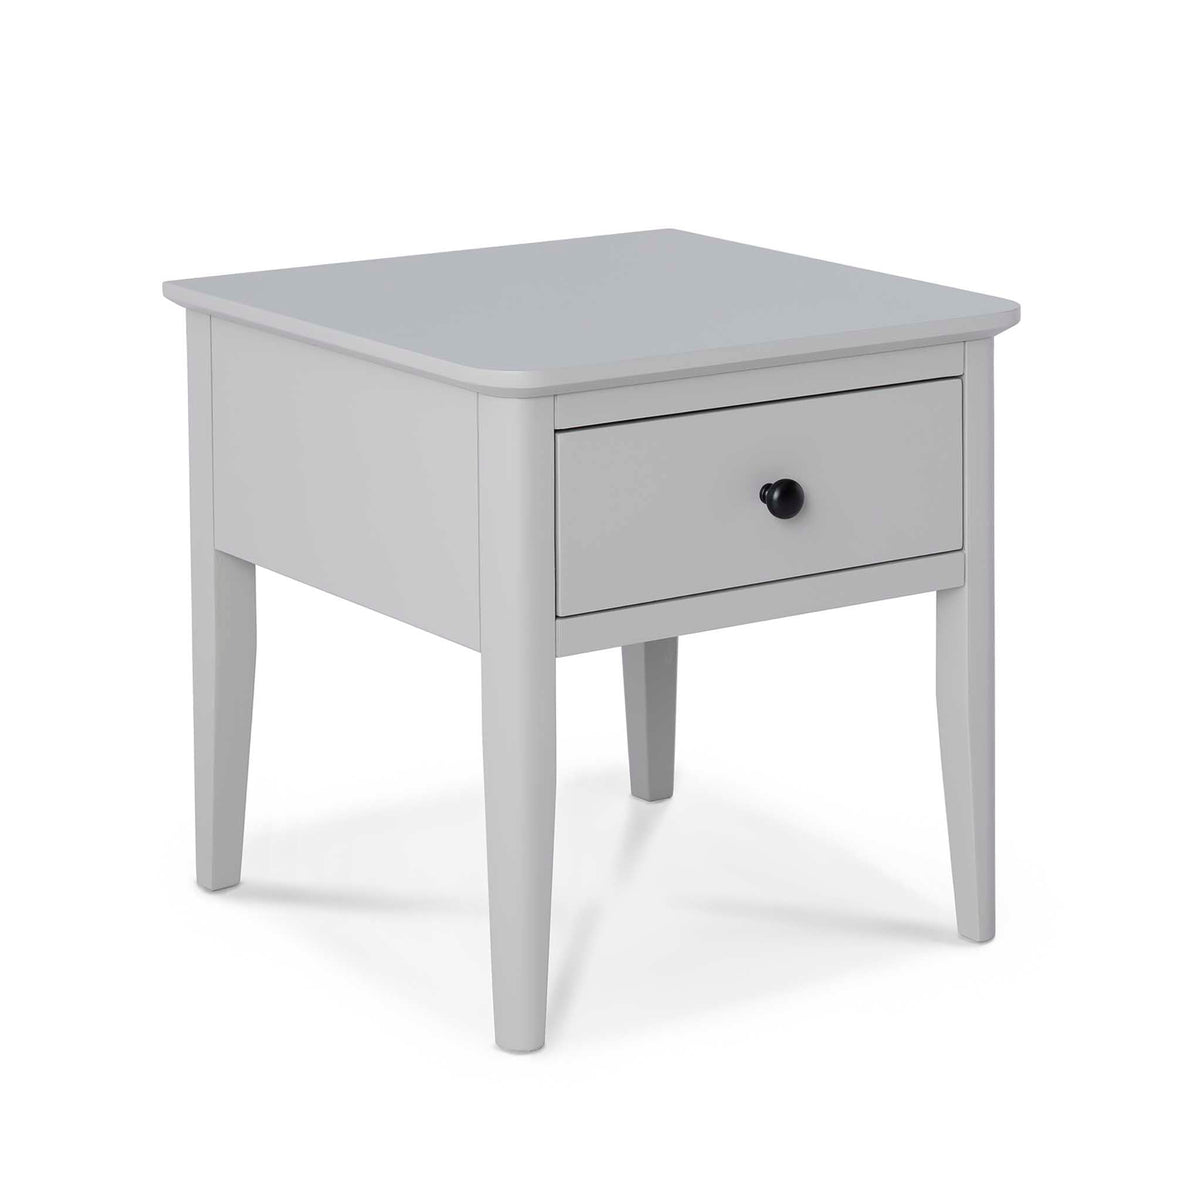 Elgin Grey Side Lamp Table from Roseland Furniture